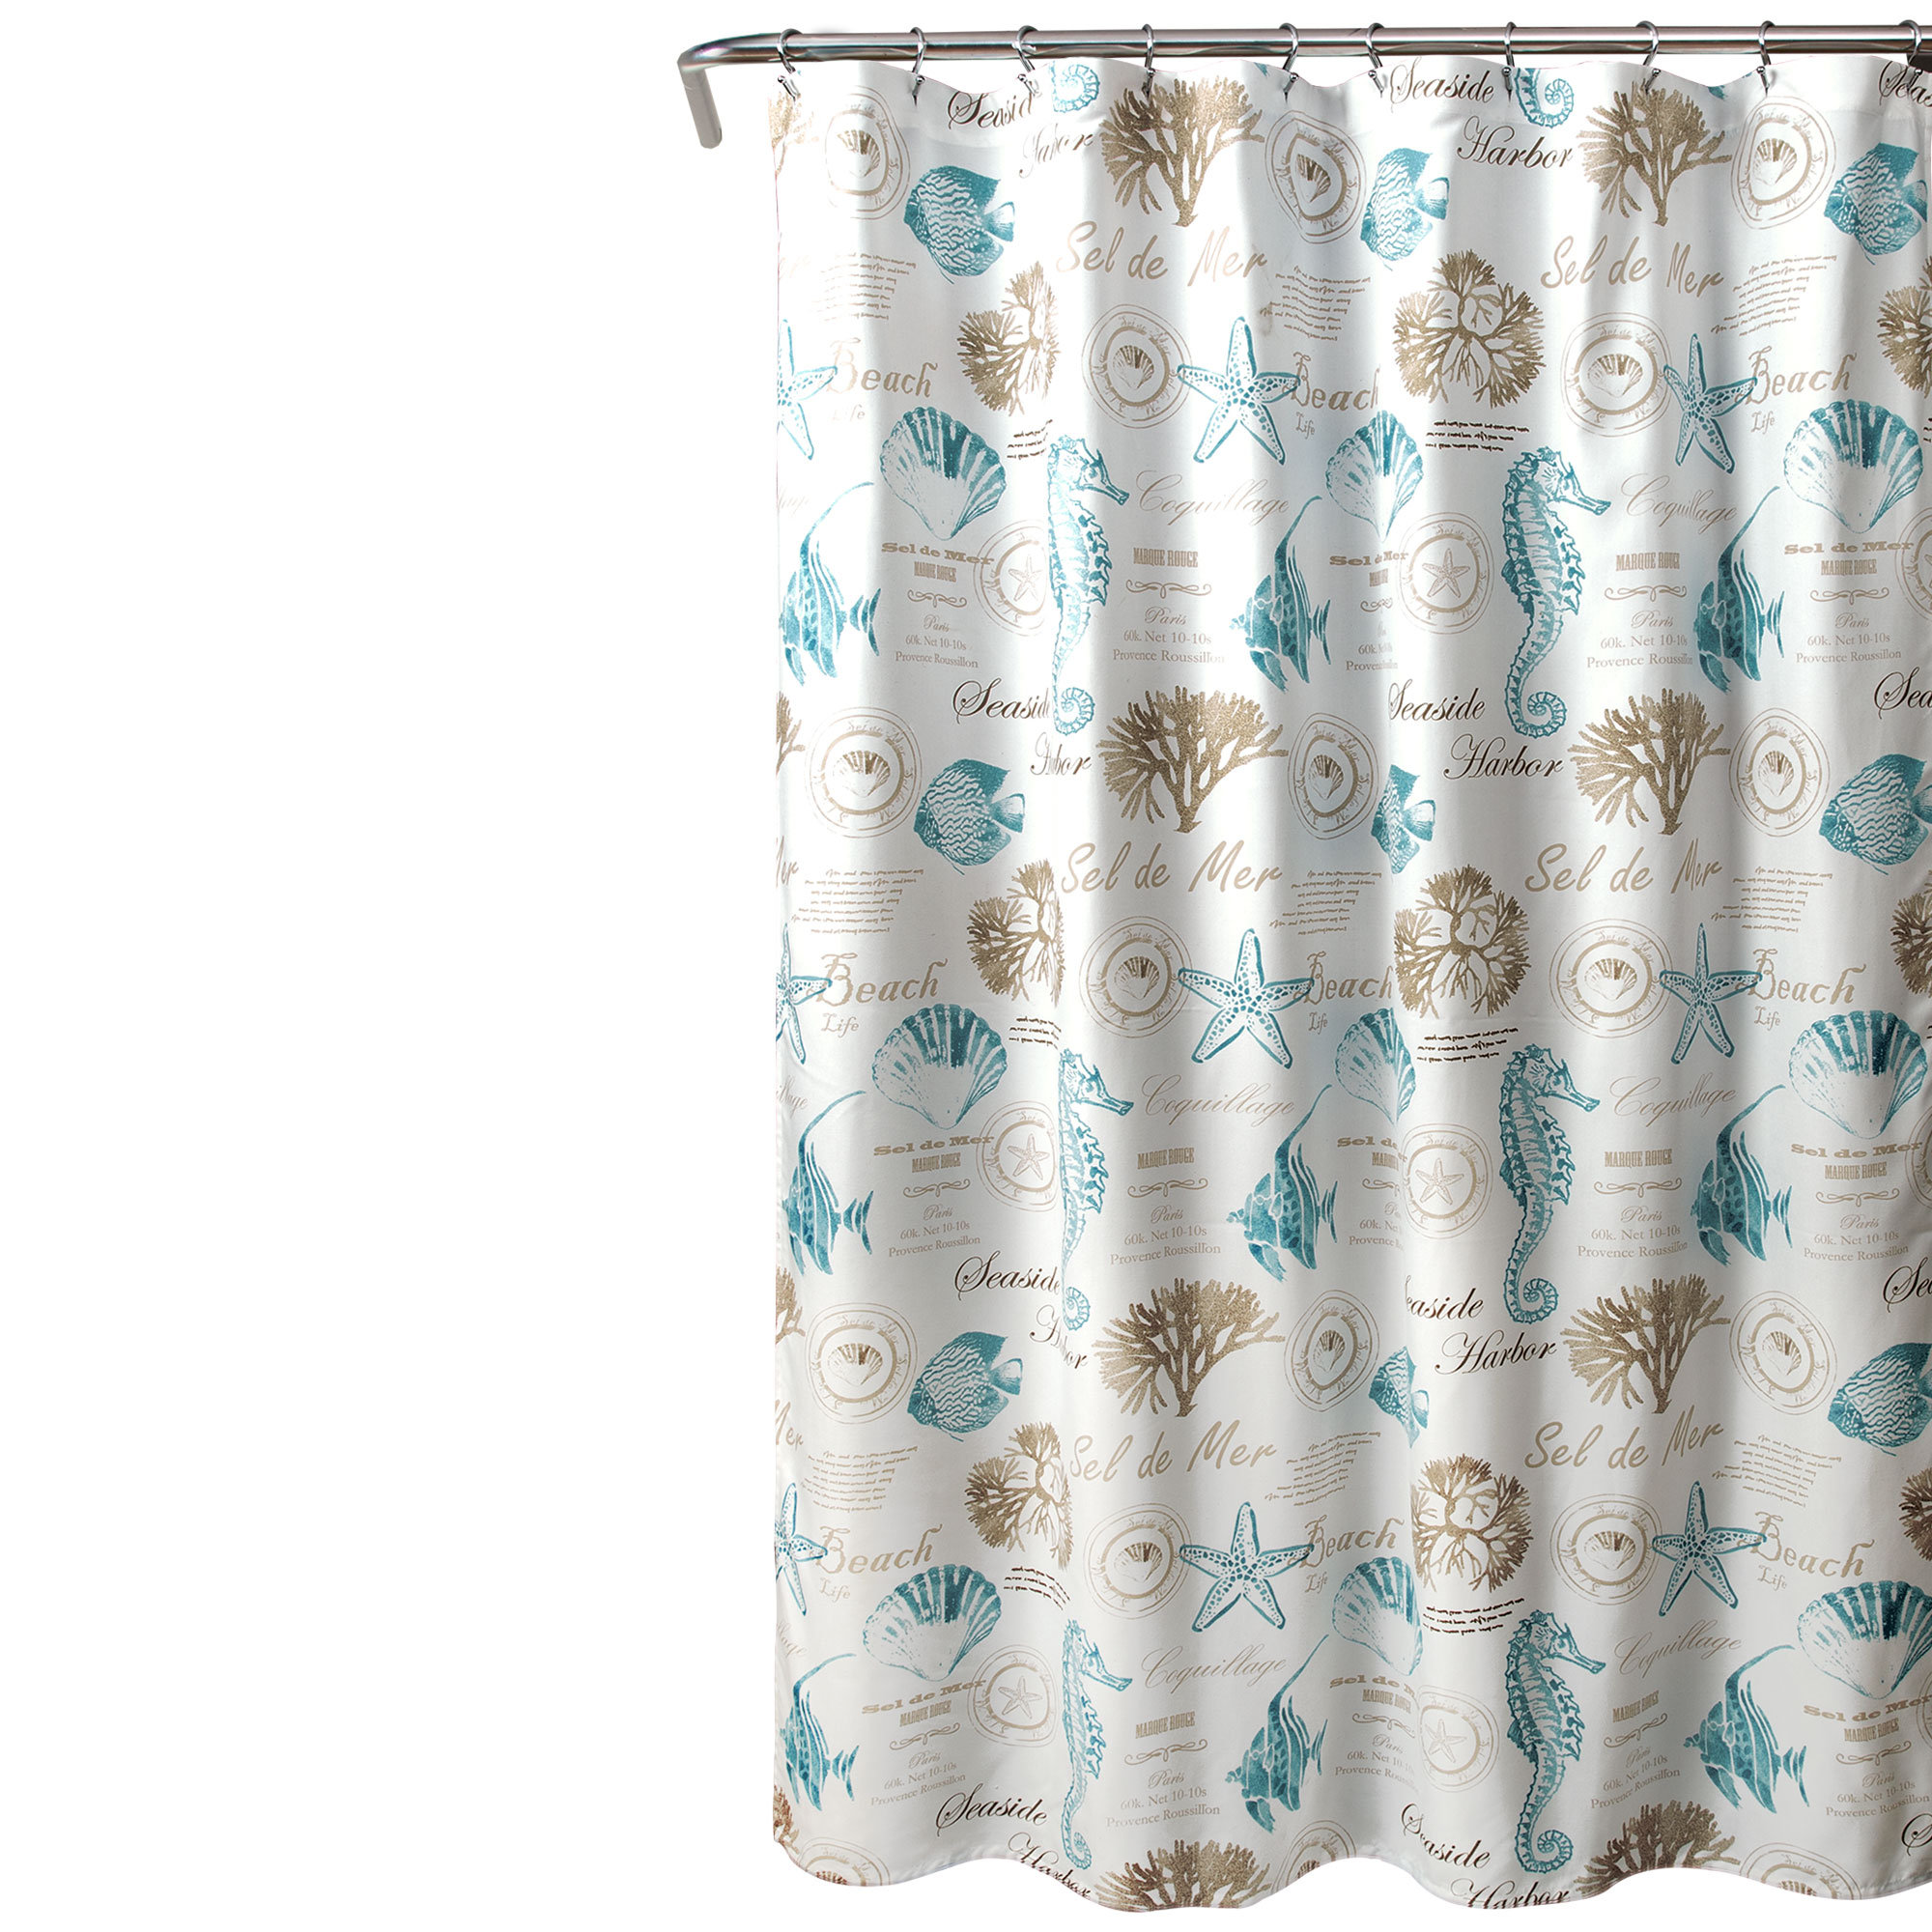 Brand New 12 sea shell/Fish stars shower curtain hooks in Box by creative bath 